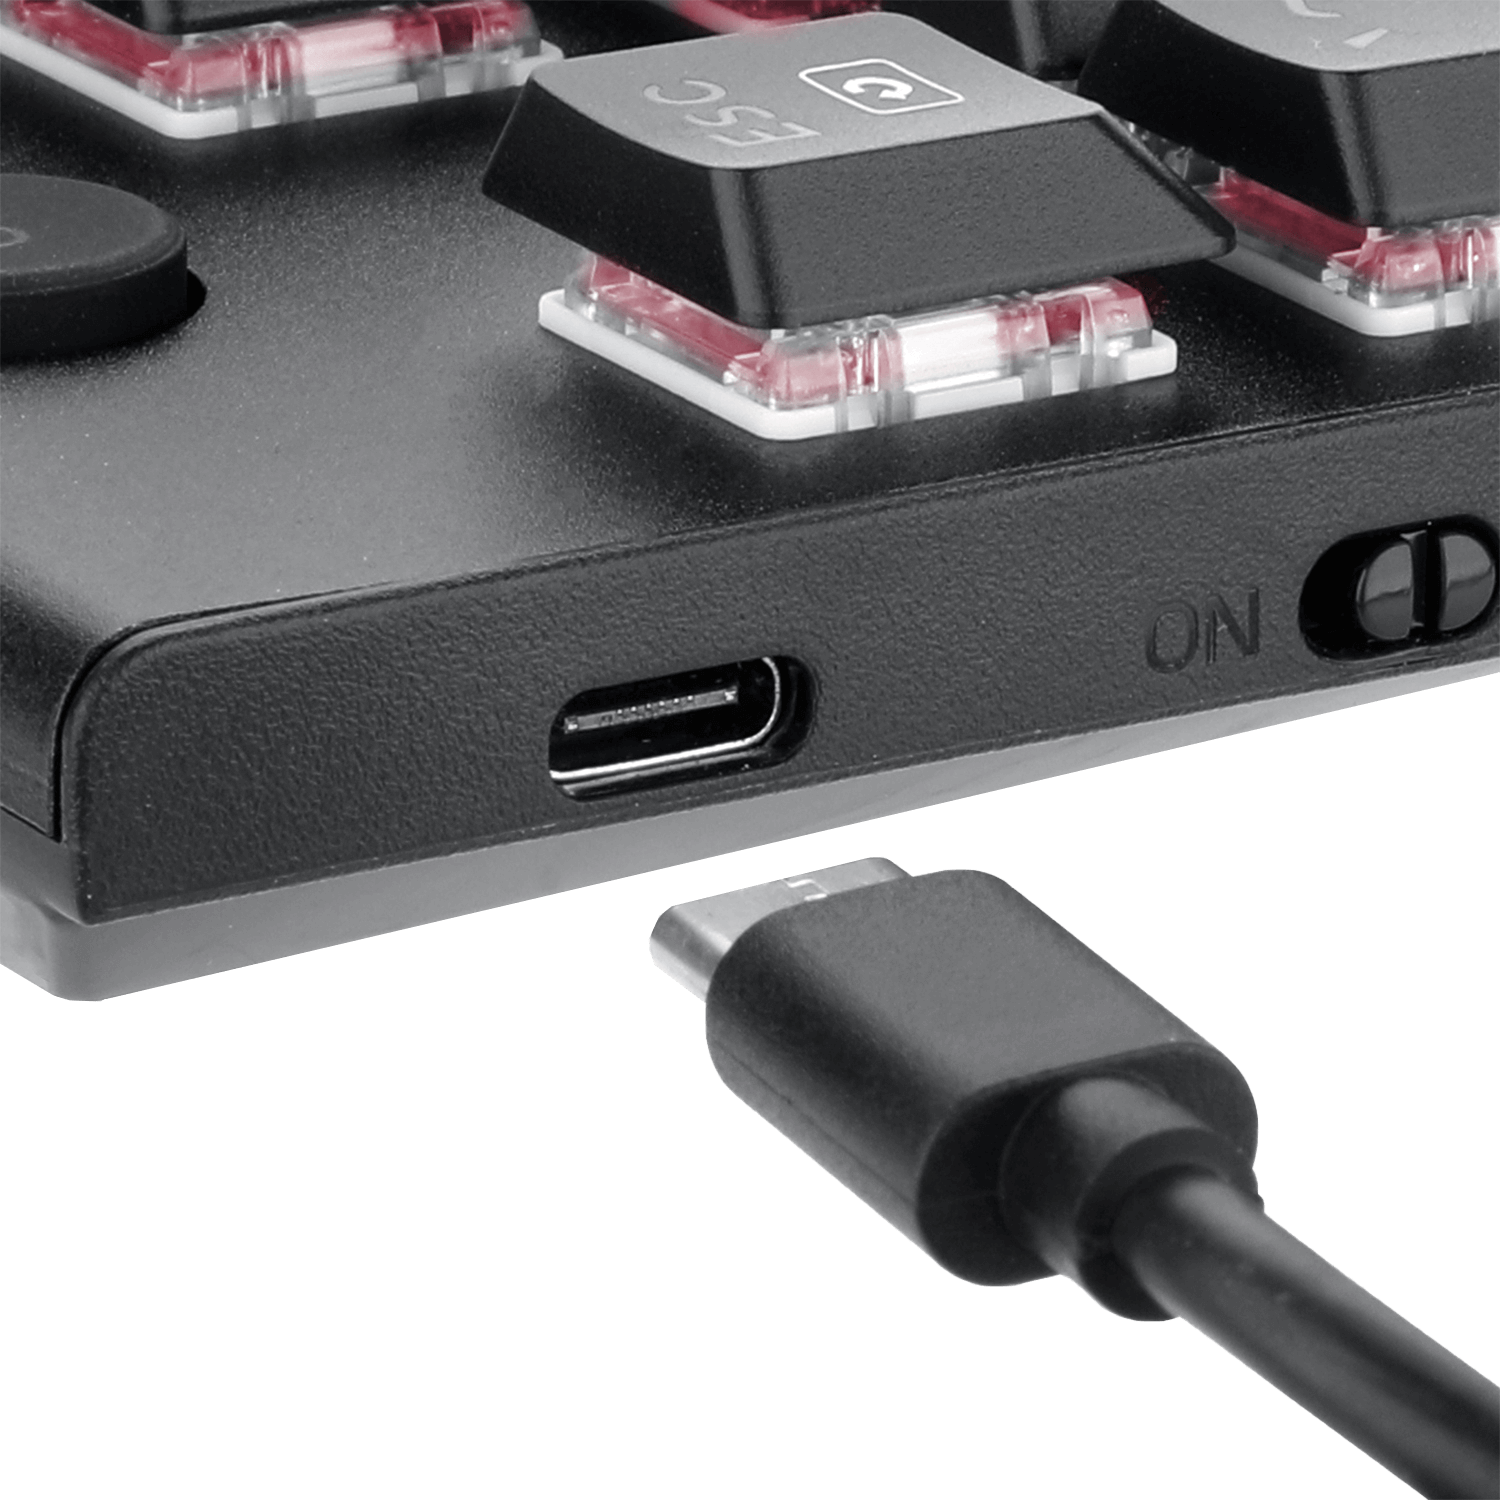 Redragon K618 Horus Wireless RGB Mechanical Keyboard, Bluetooth/2.4Ghz/Wired Tri-Mode Ultra-Thin Low Profile Gaming Keyboard